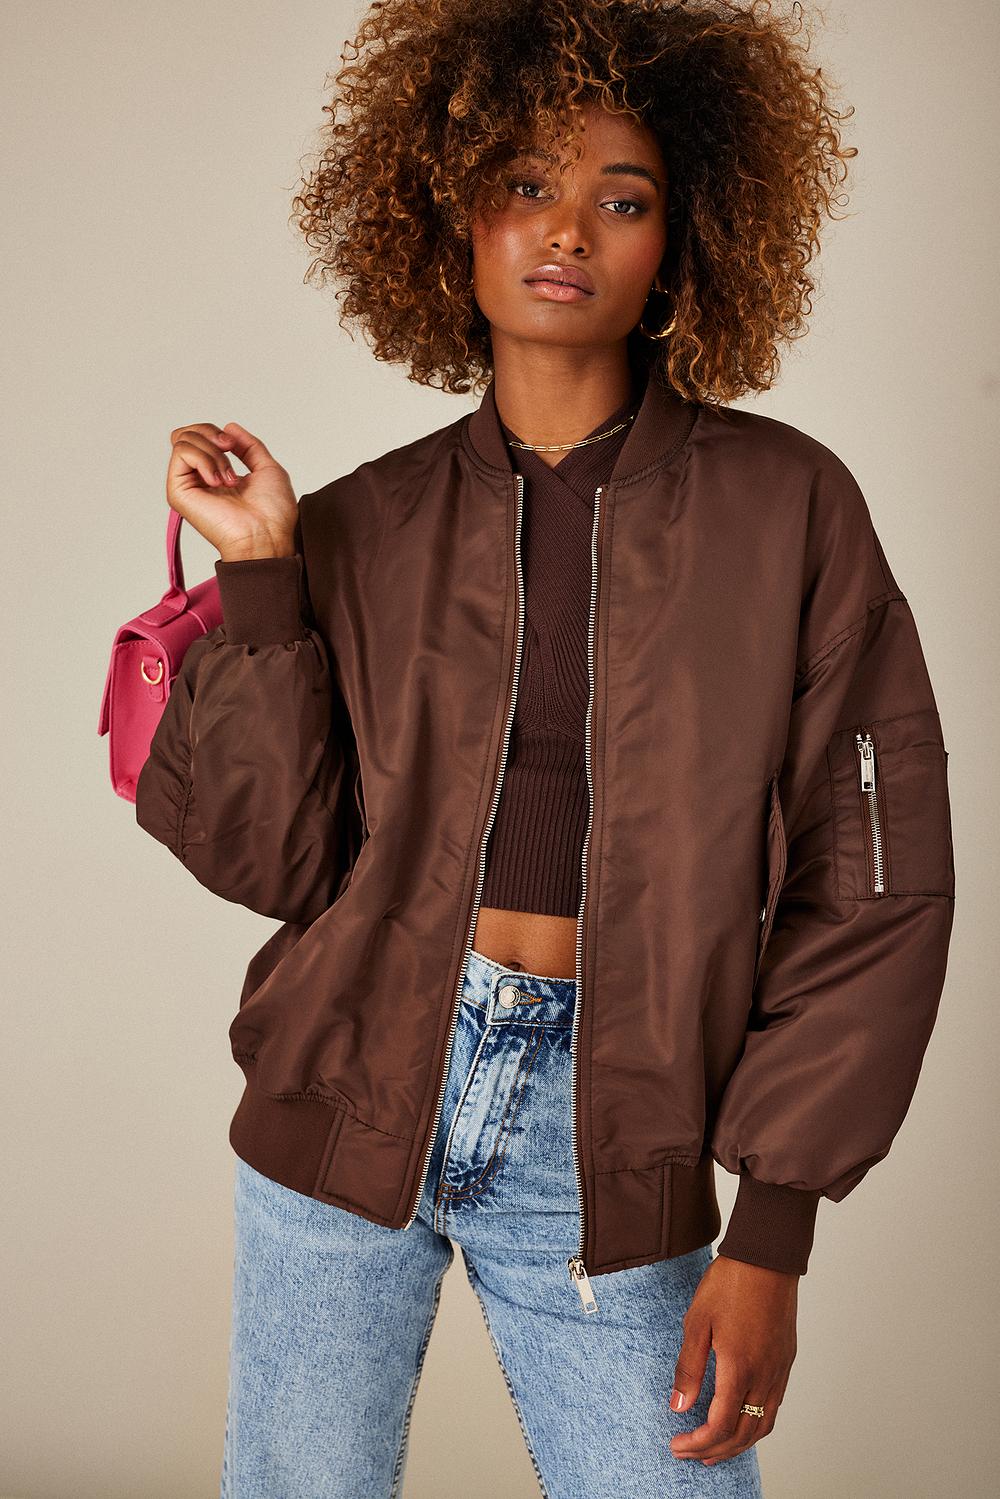 Brown bomber jacket